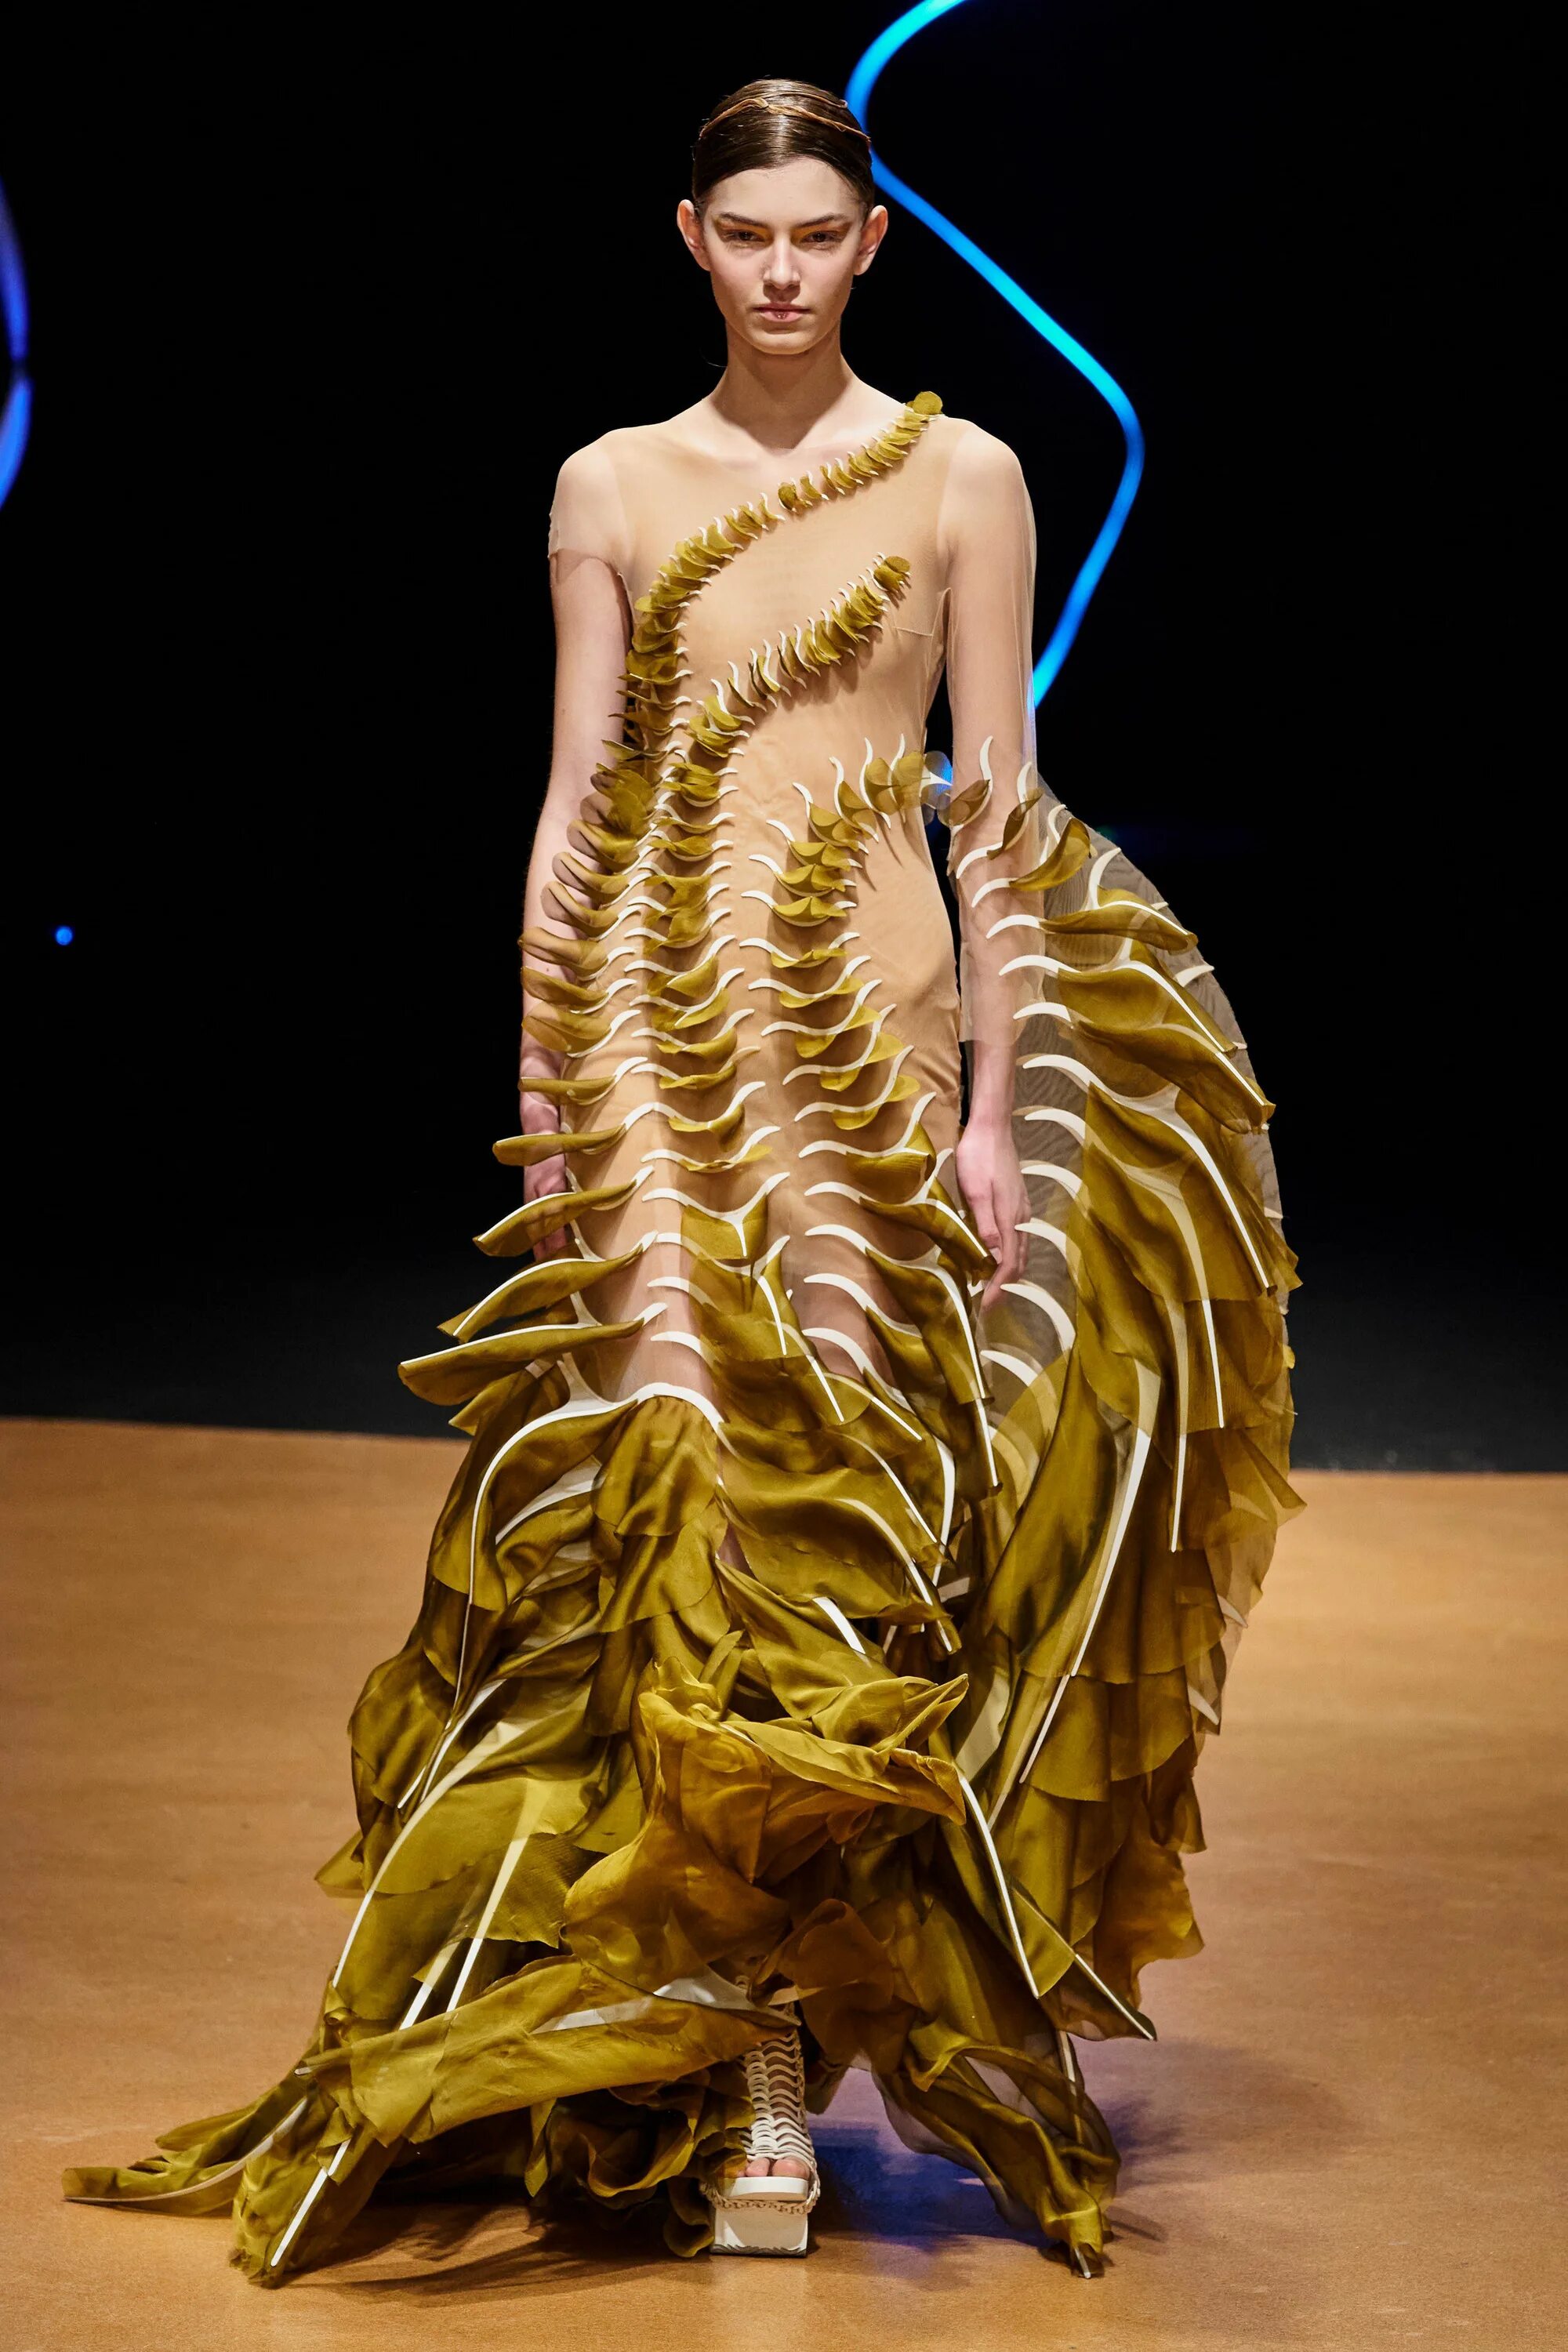 Айрис Ван Херпен коллекция. Айрис Ван Херпен 2020. Самые лучшие моды в мире